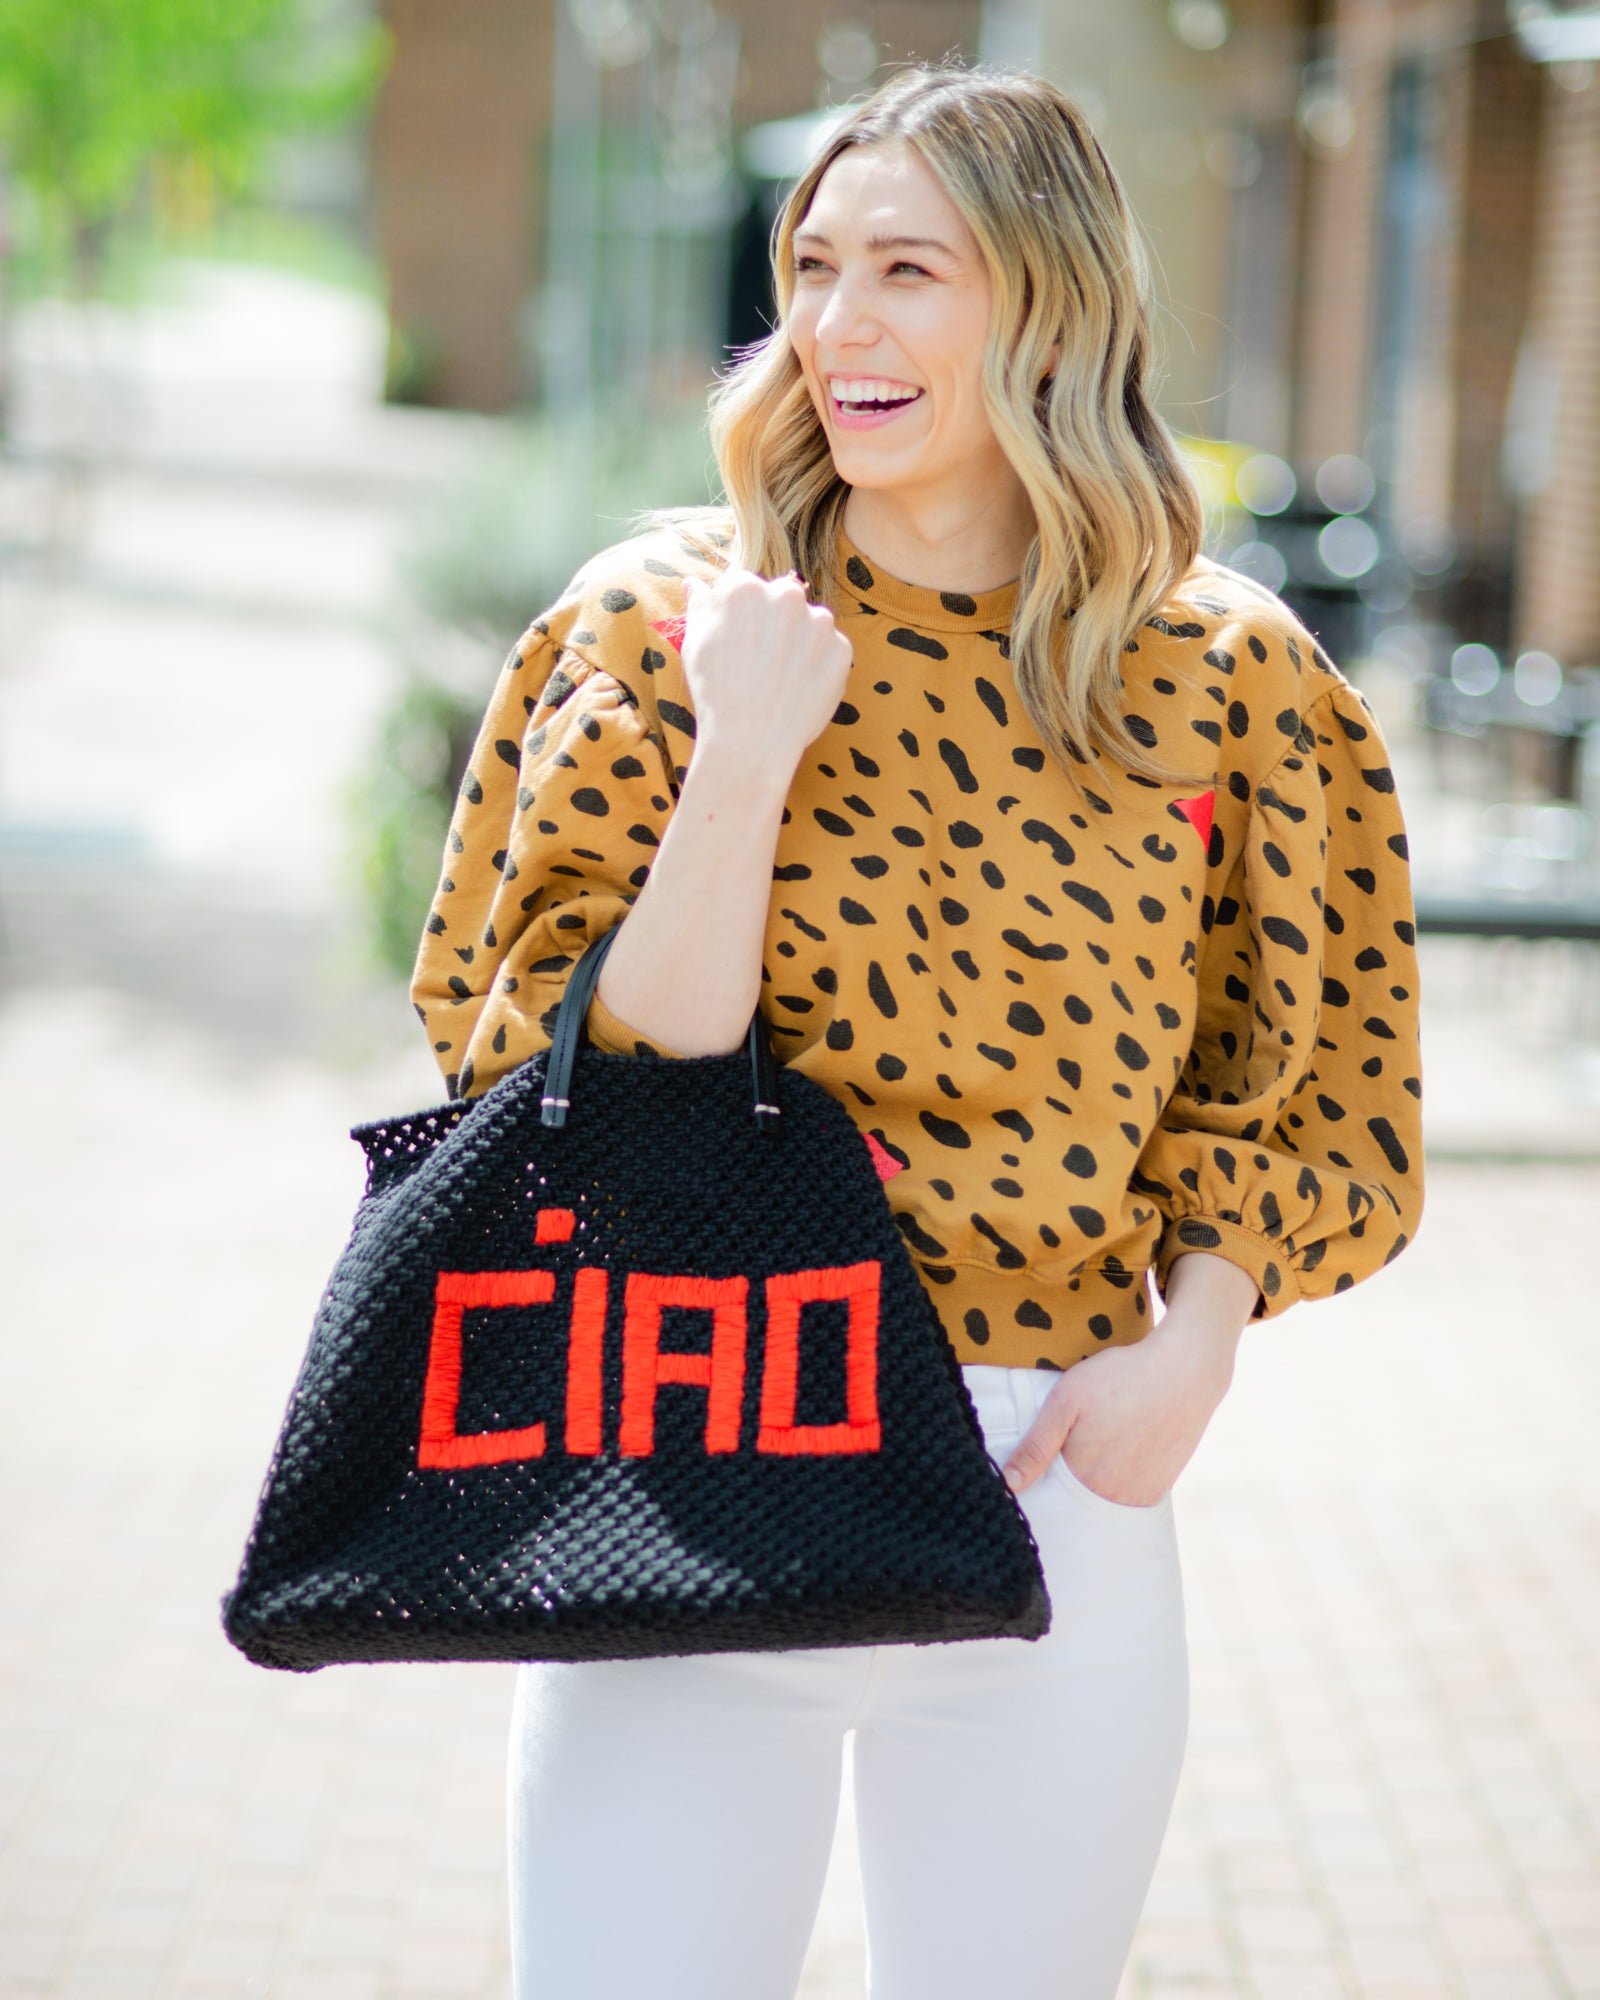 Clare V. Leopard Crossbody Bags for Women